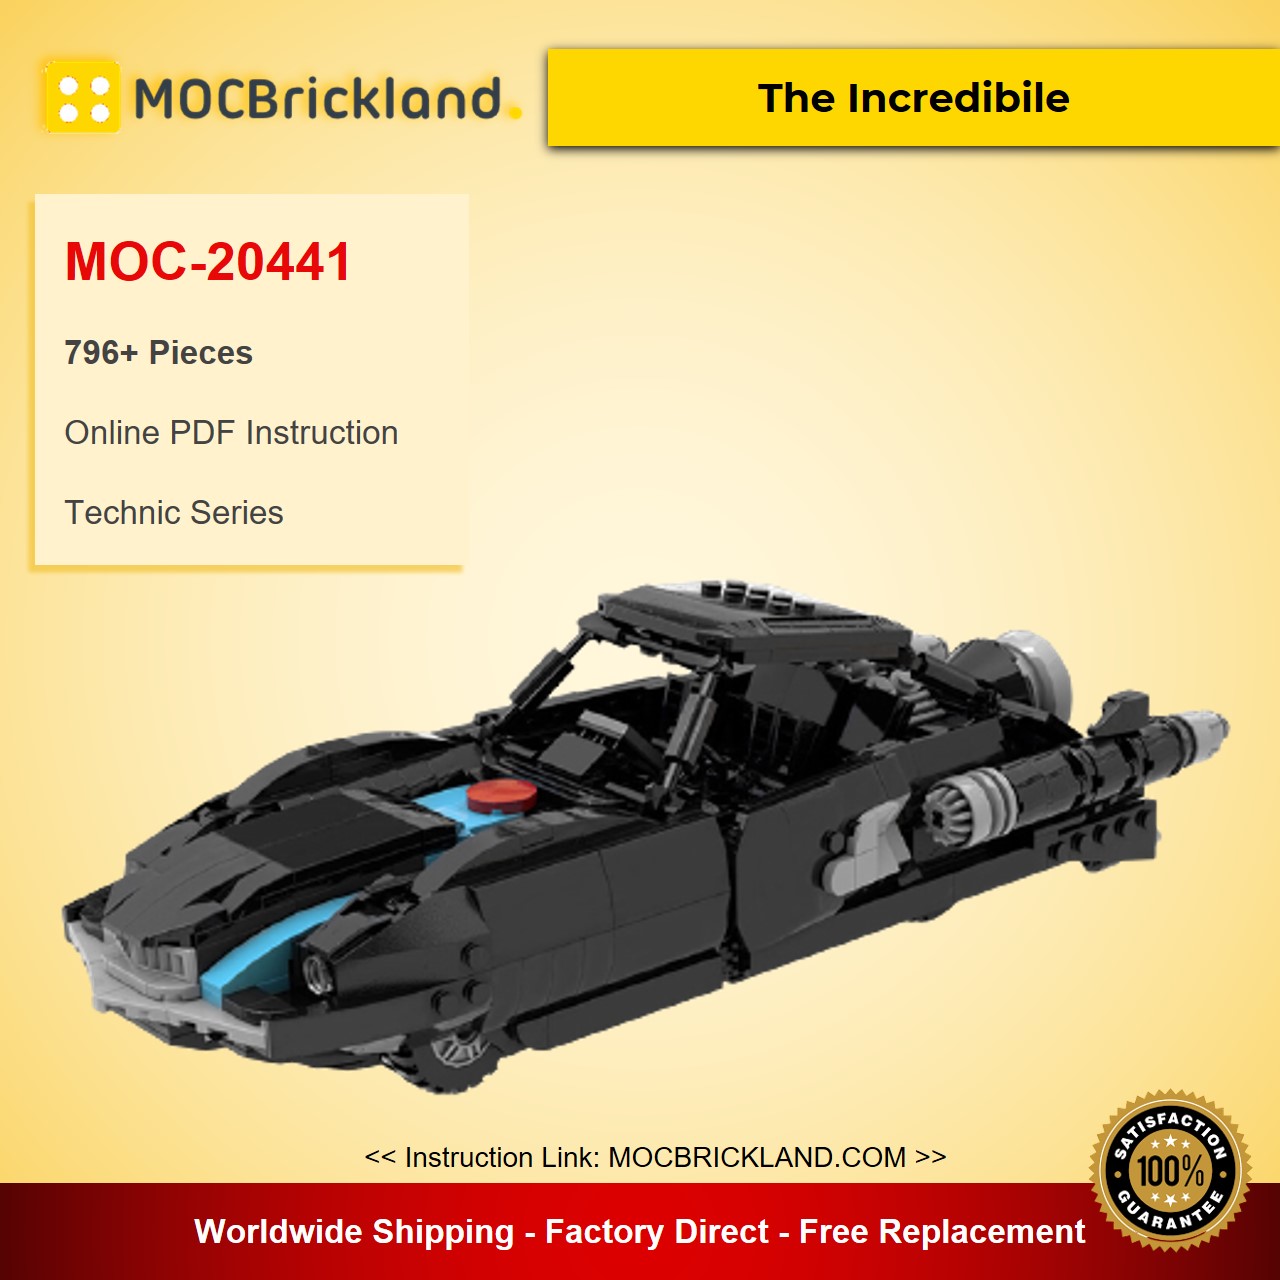 MOCBRICKLAND MOC-20441 The Incredible